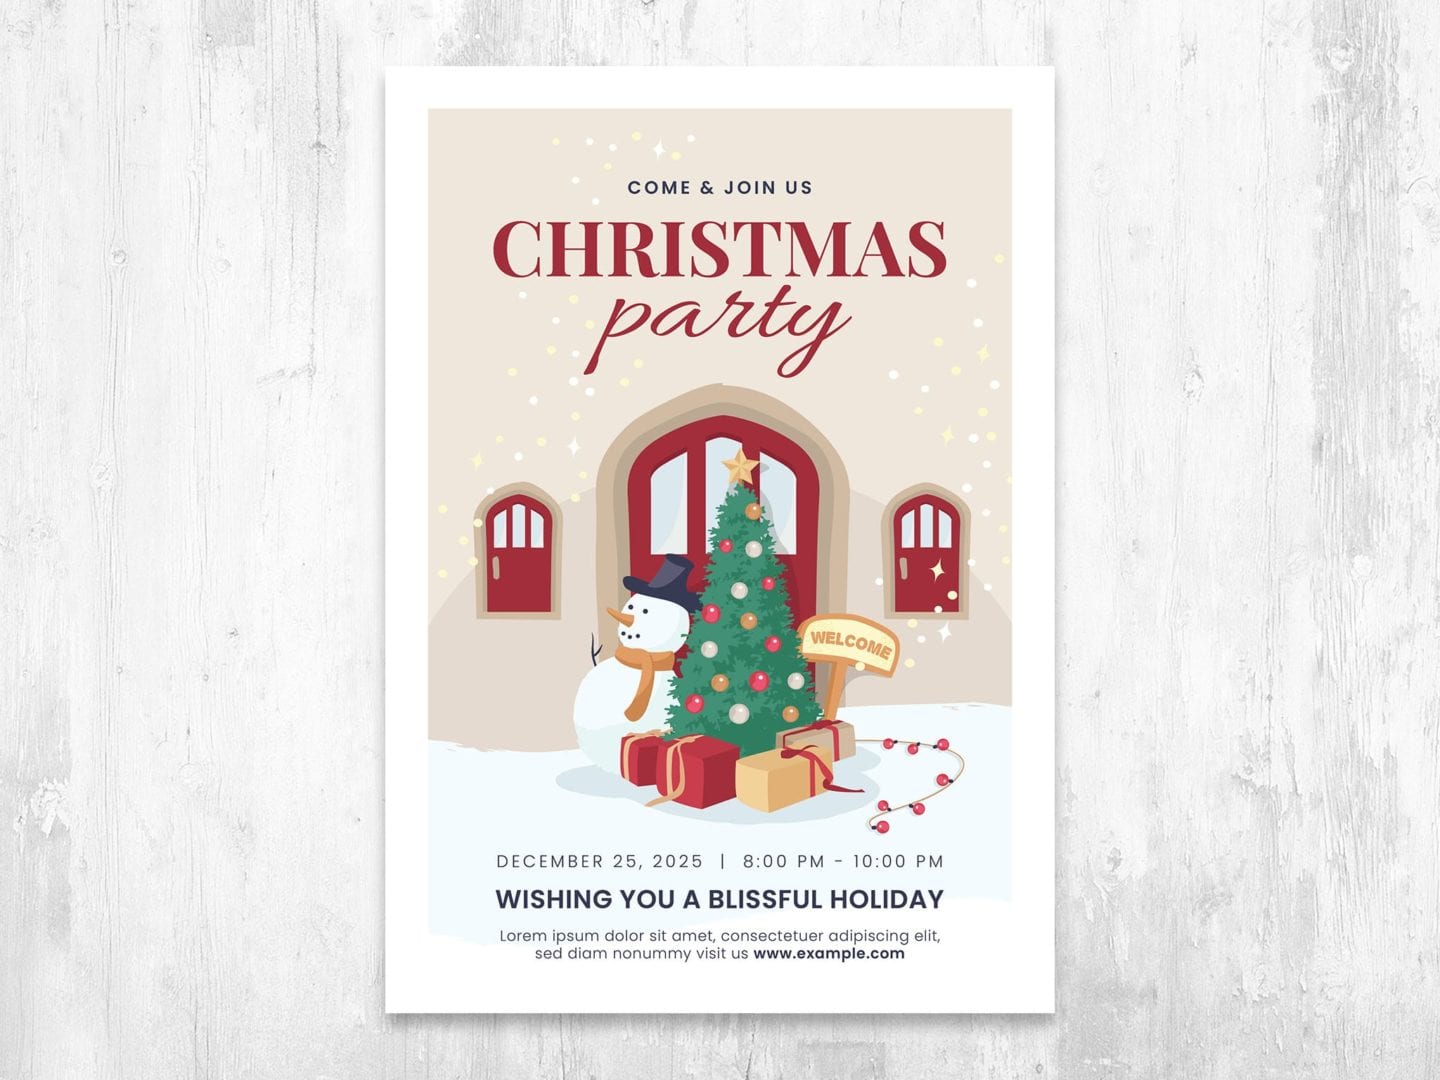 Christmas Card Templates - Adobe Illustrator, Vector, EPS - BrandPacks Inside Adobe Illustrator Christmas Card Template